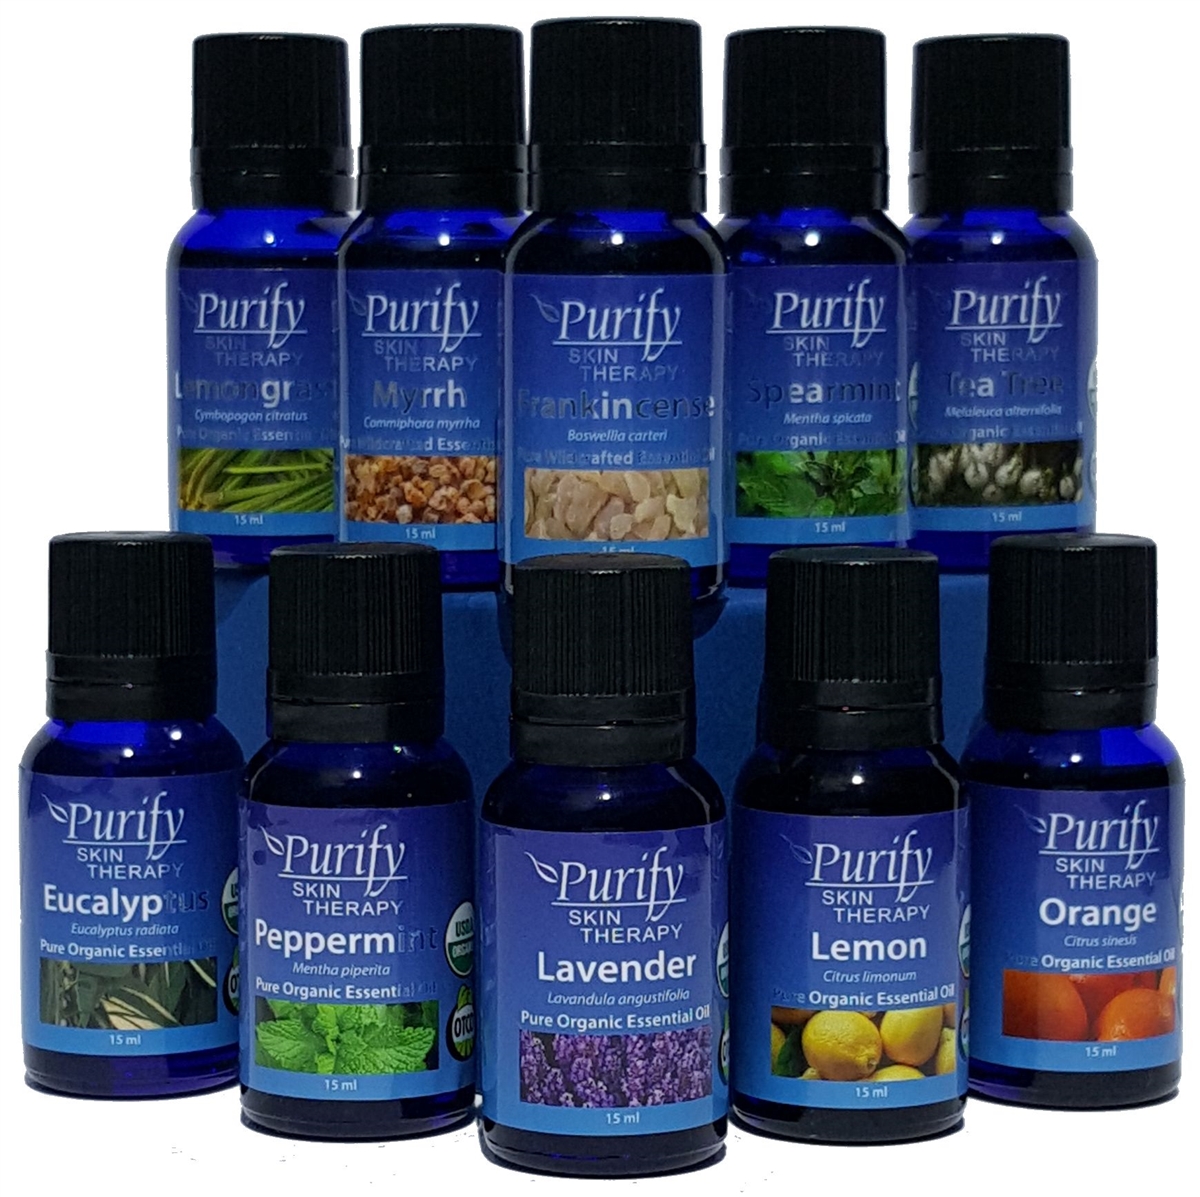 Plant Therapy Top 6 Organic Essential Oil Set - Lavender, Peppermint,  Eucalyptus, Lemon, Tea Tree 100% Pure, USDA Organic, Natural Aromatherapy